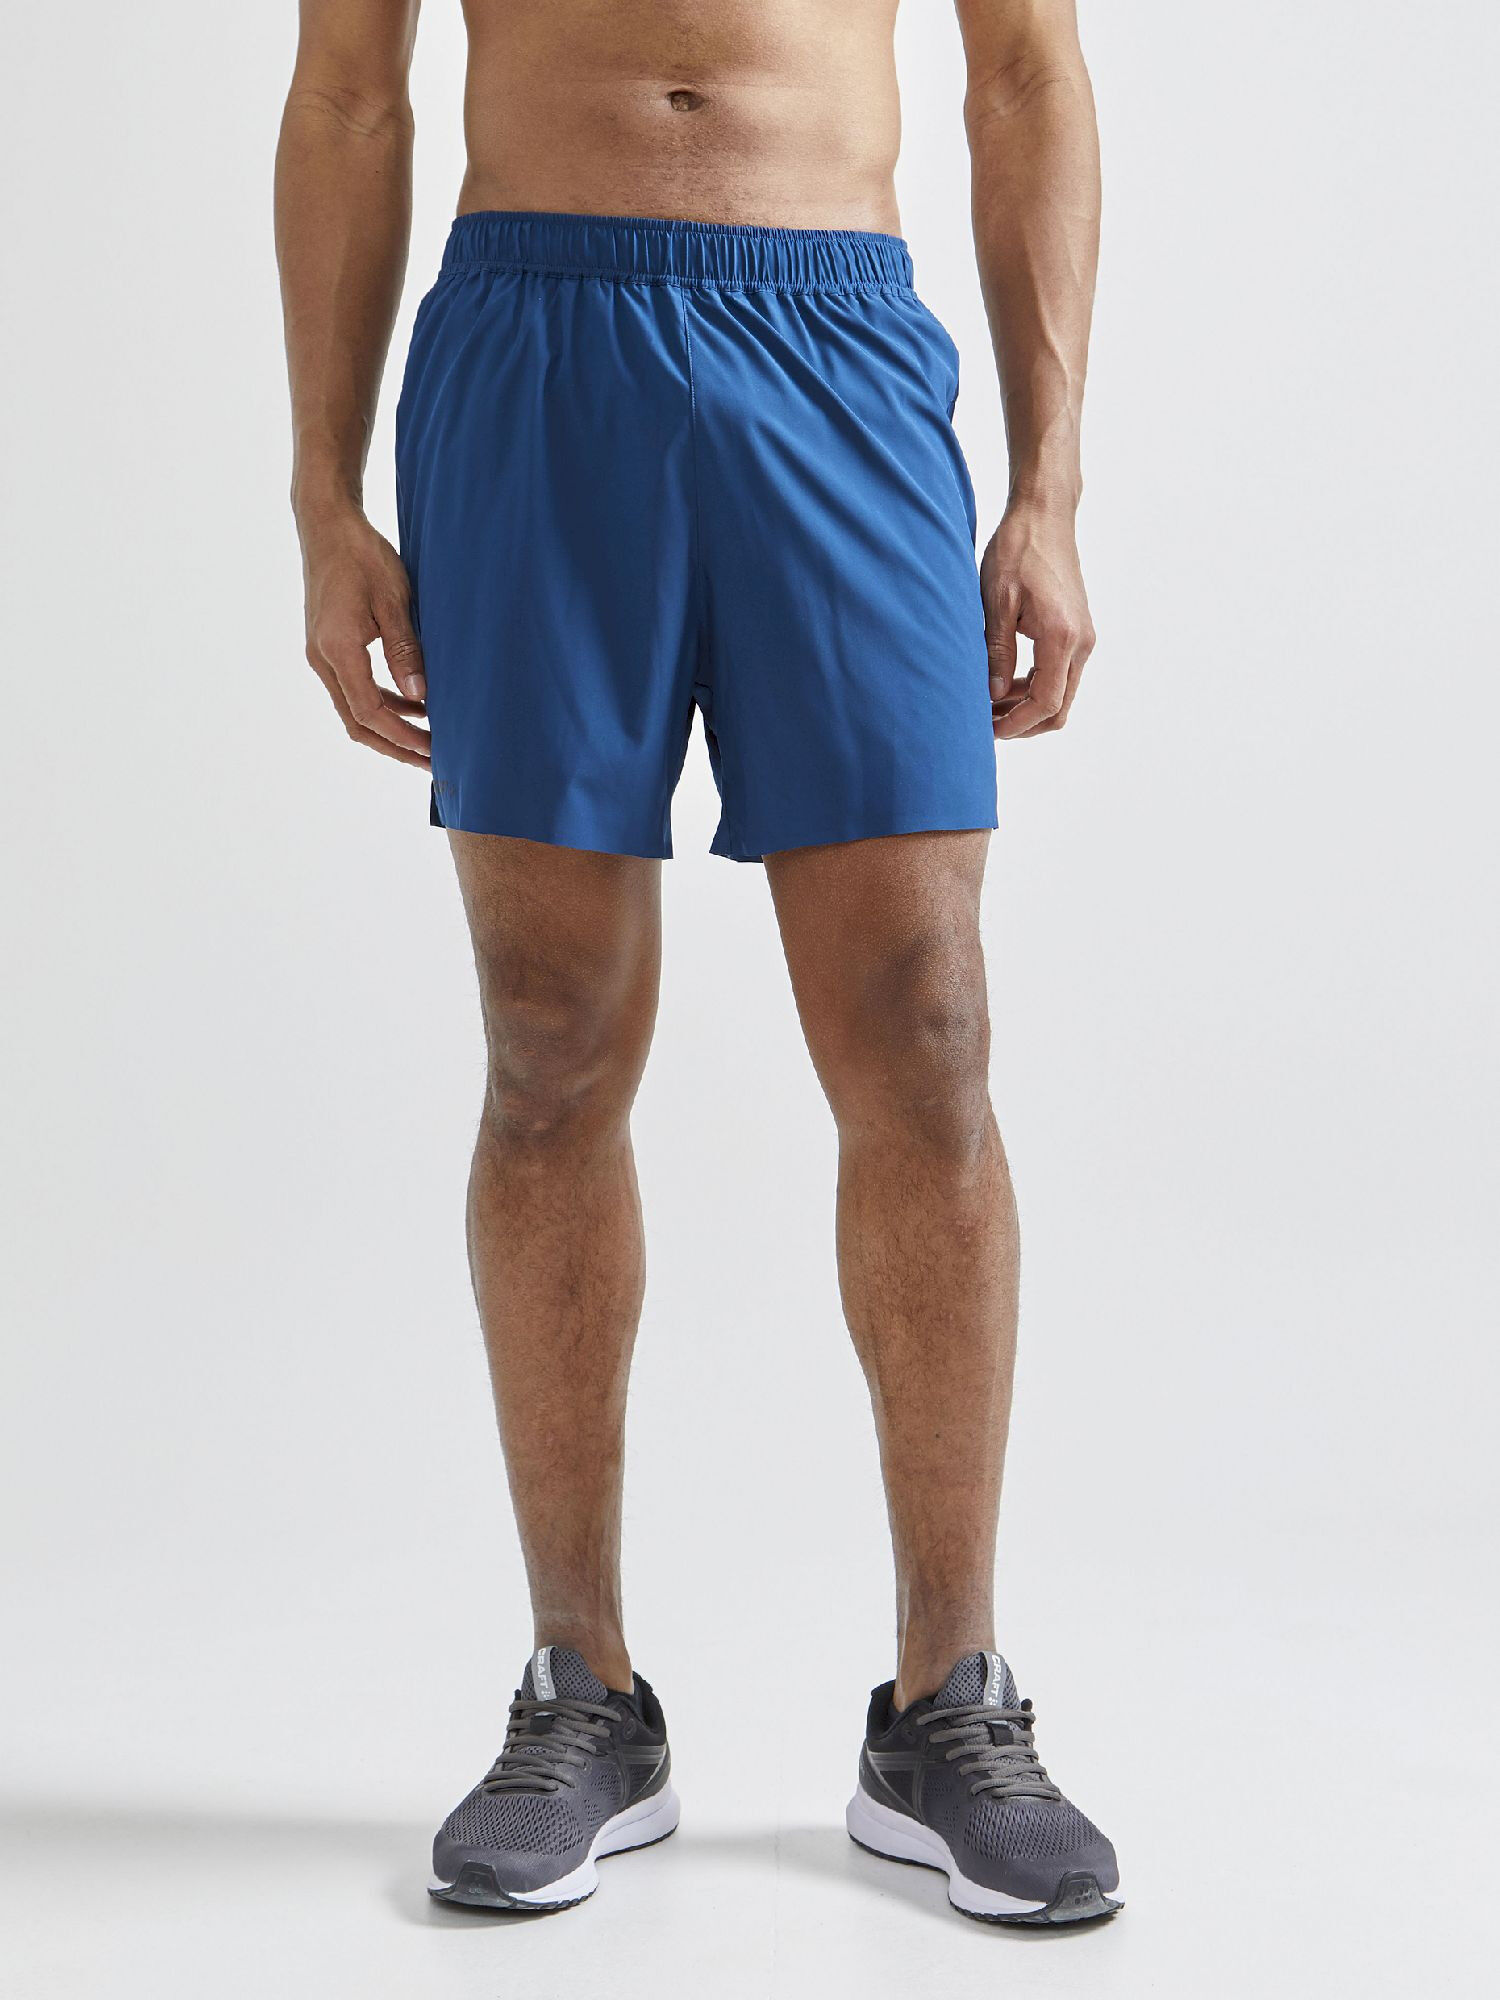 Craft Adv Essence 5" Stretch Shorts - Running shorts - Men's